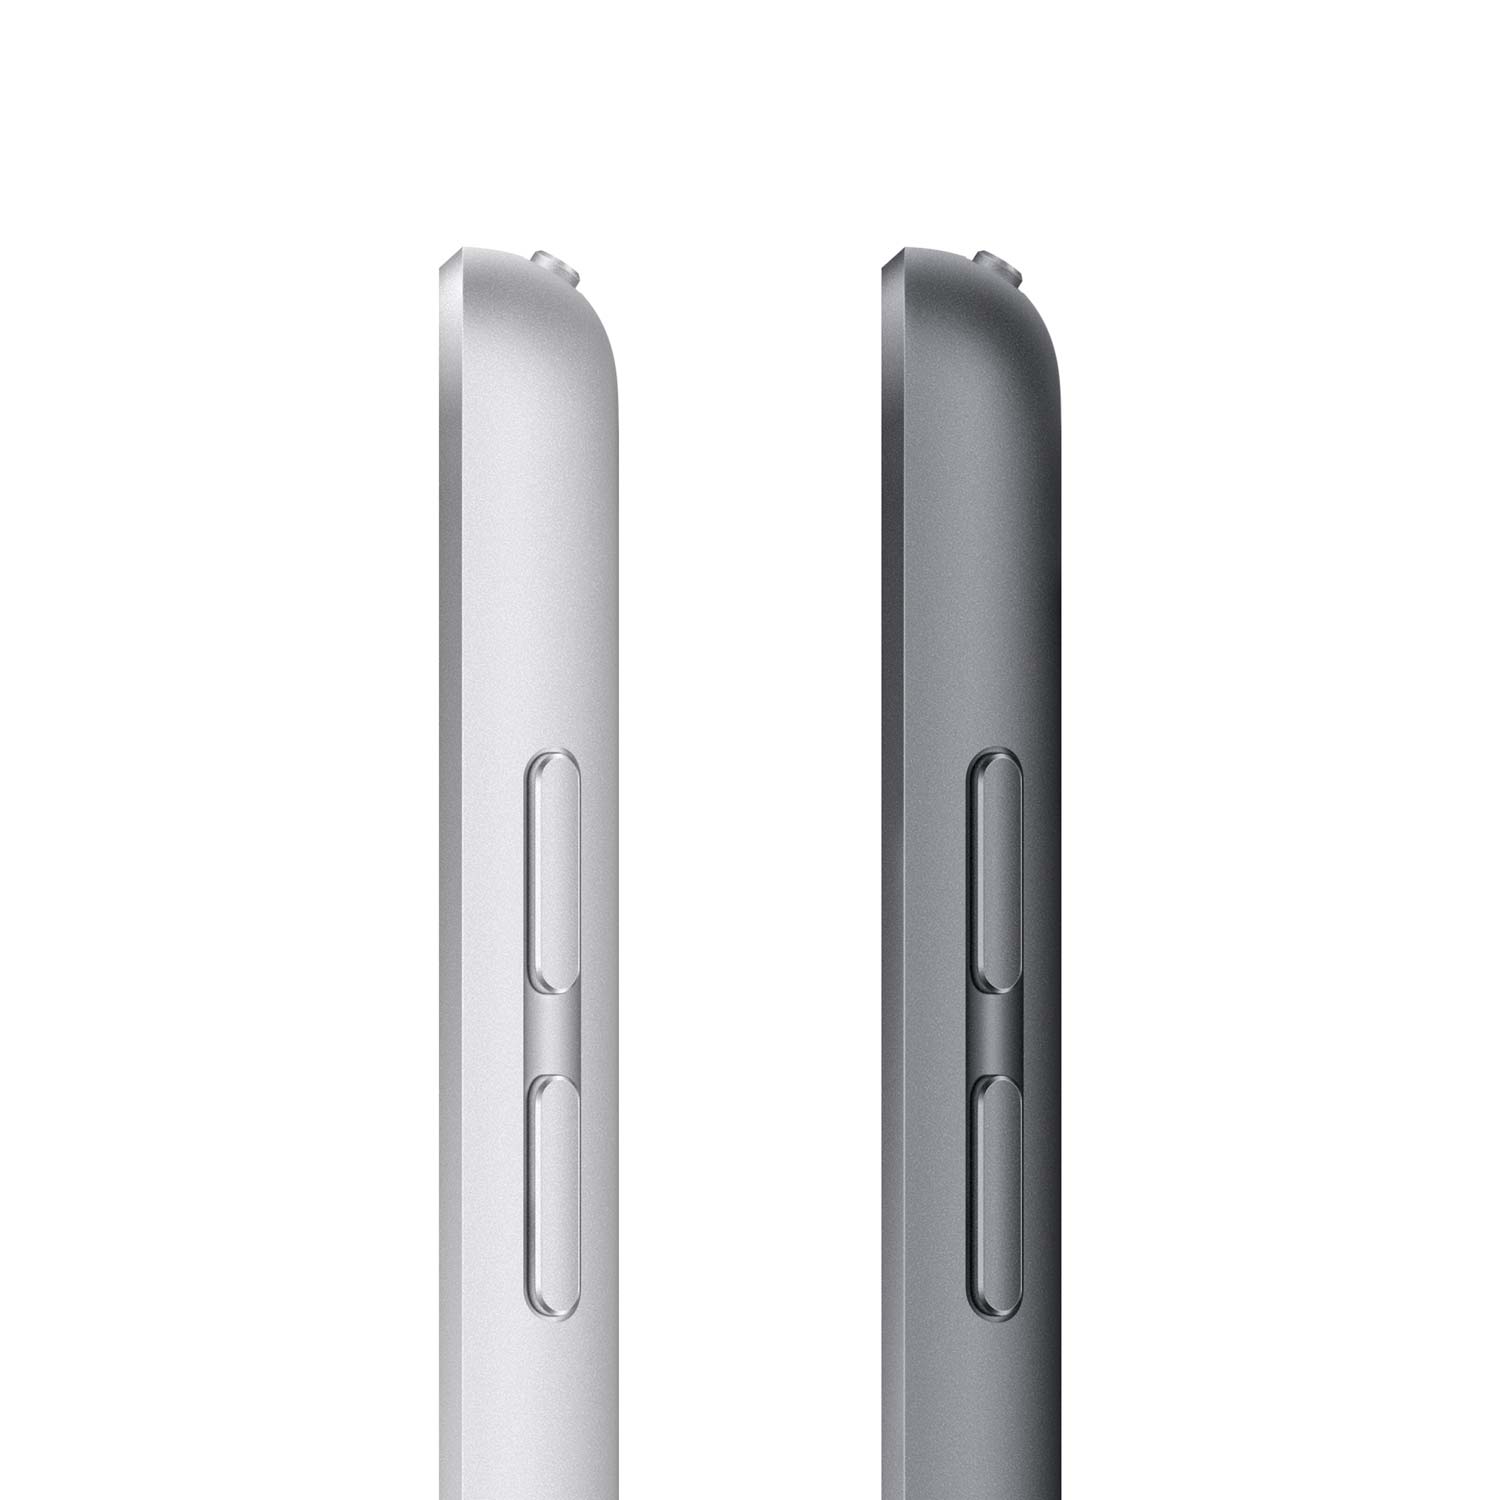 Apple iPad 10.2 spacegrau 9.Gen - 64GB - WiFi